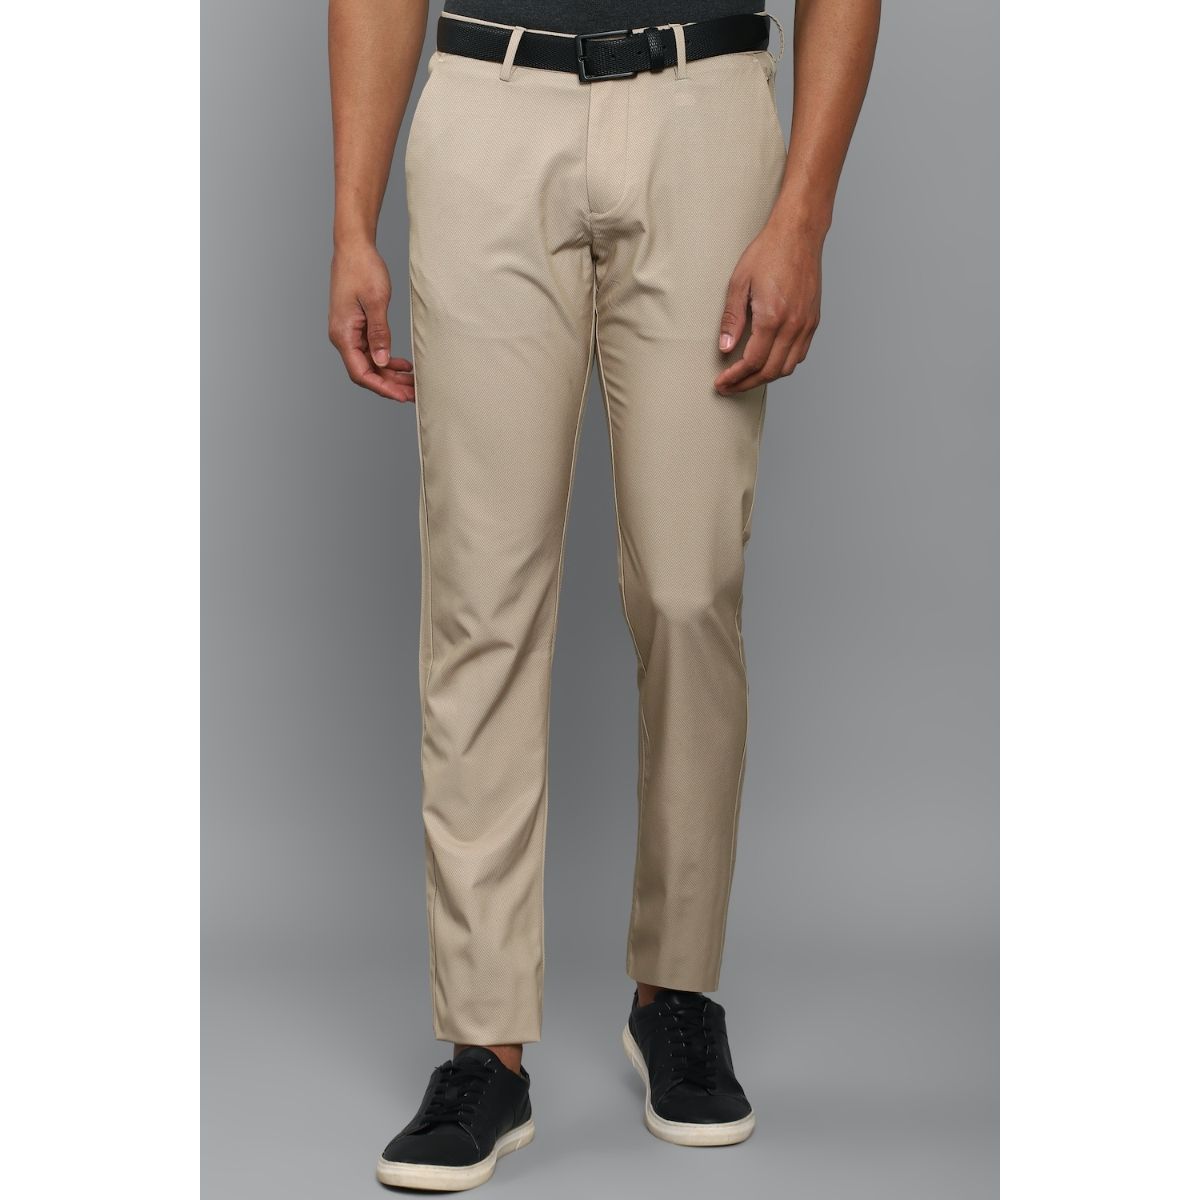 Buy Best Seller Japanese Style Cotton Blend Men's Casual Trousers, Linen  Feel Pants, Summer Trousers, Men Cotton Blend Linen Feel Trousers, Online  in India - Etsy